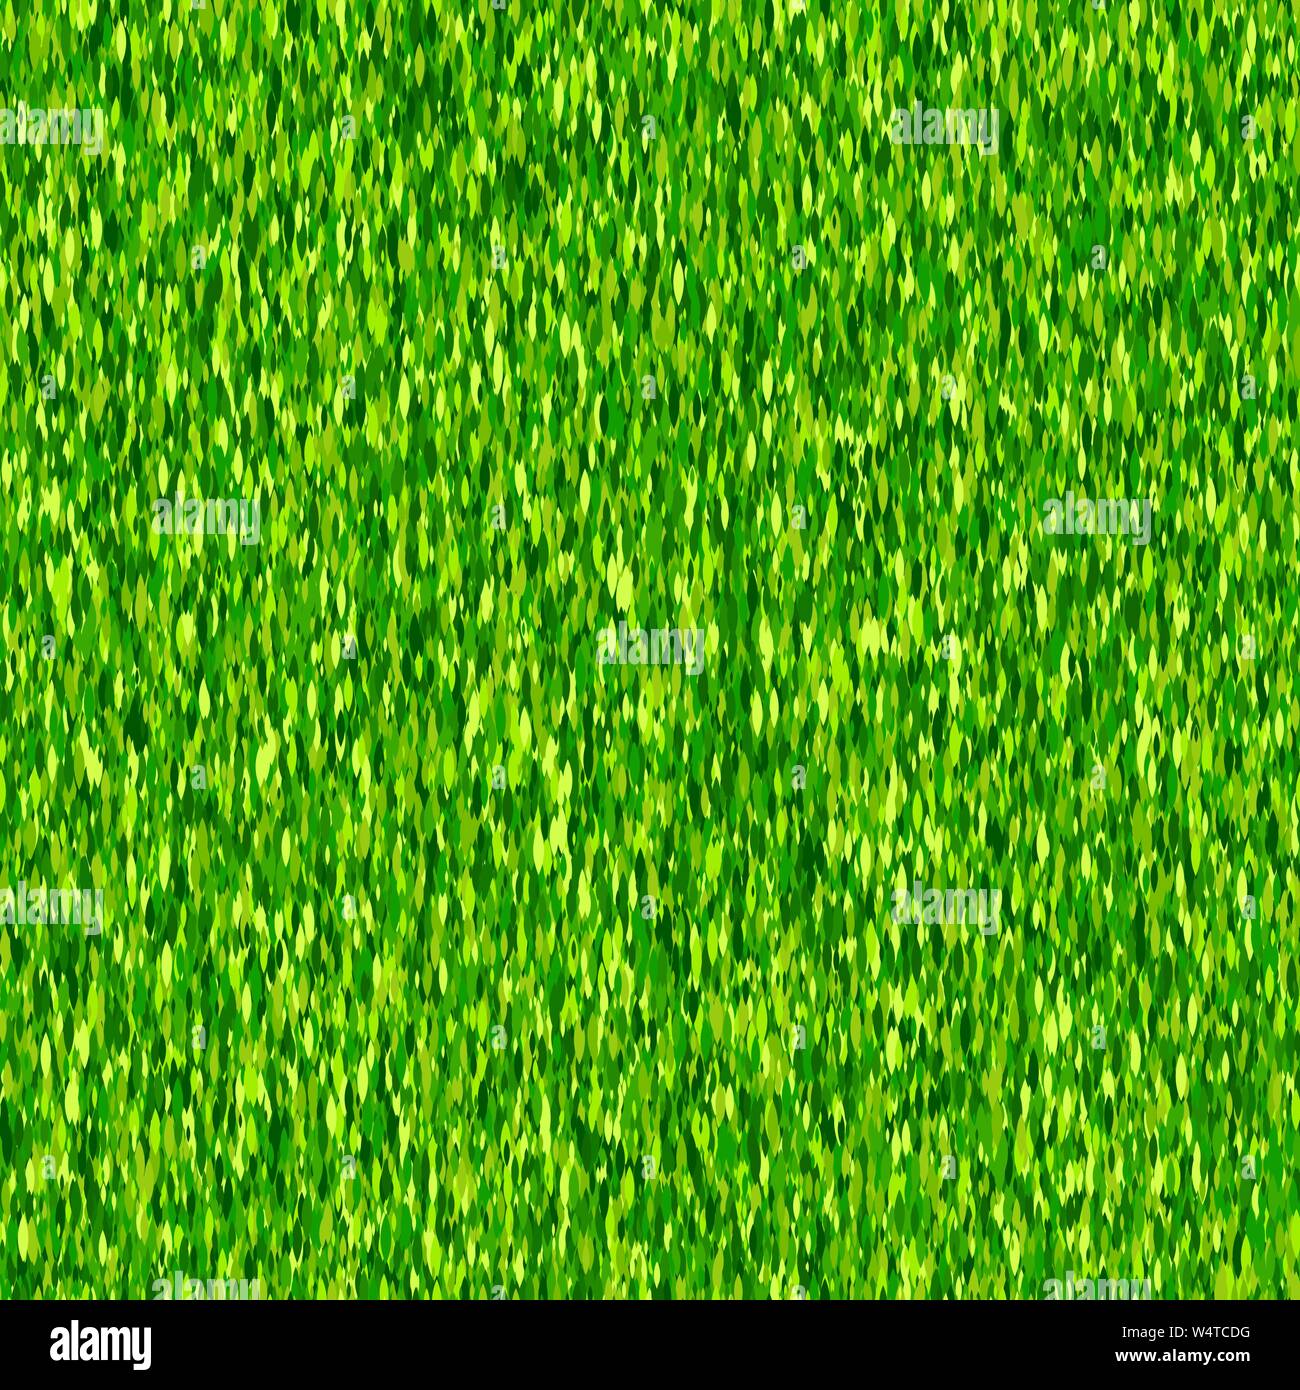 Green grass seamless pattern vector background Stock Vector